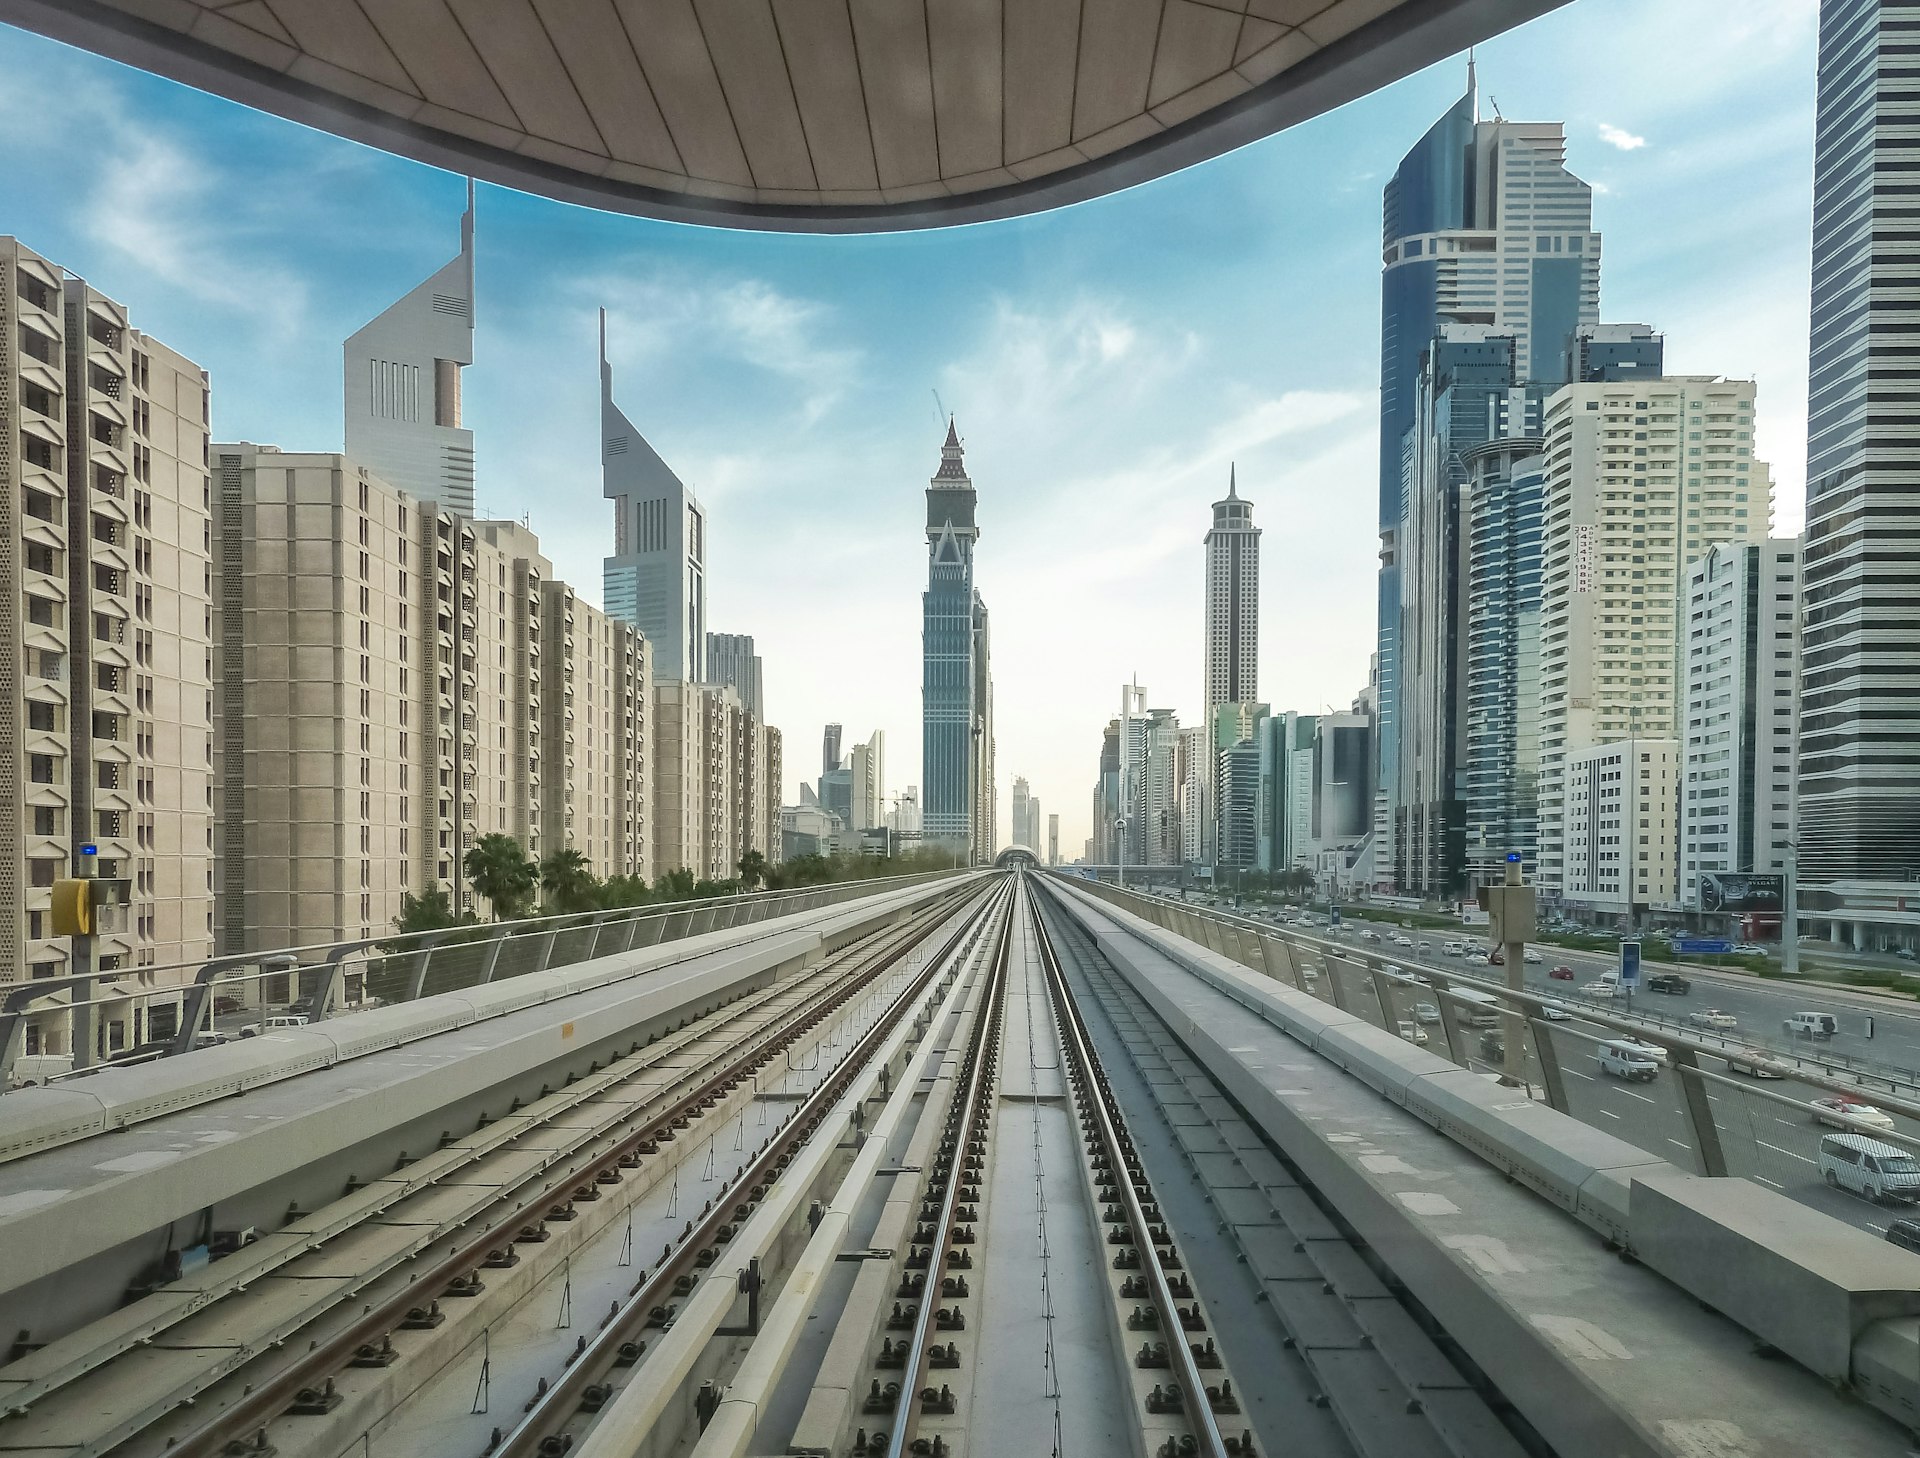 Train tracks at a Dubai Metro station